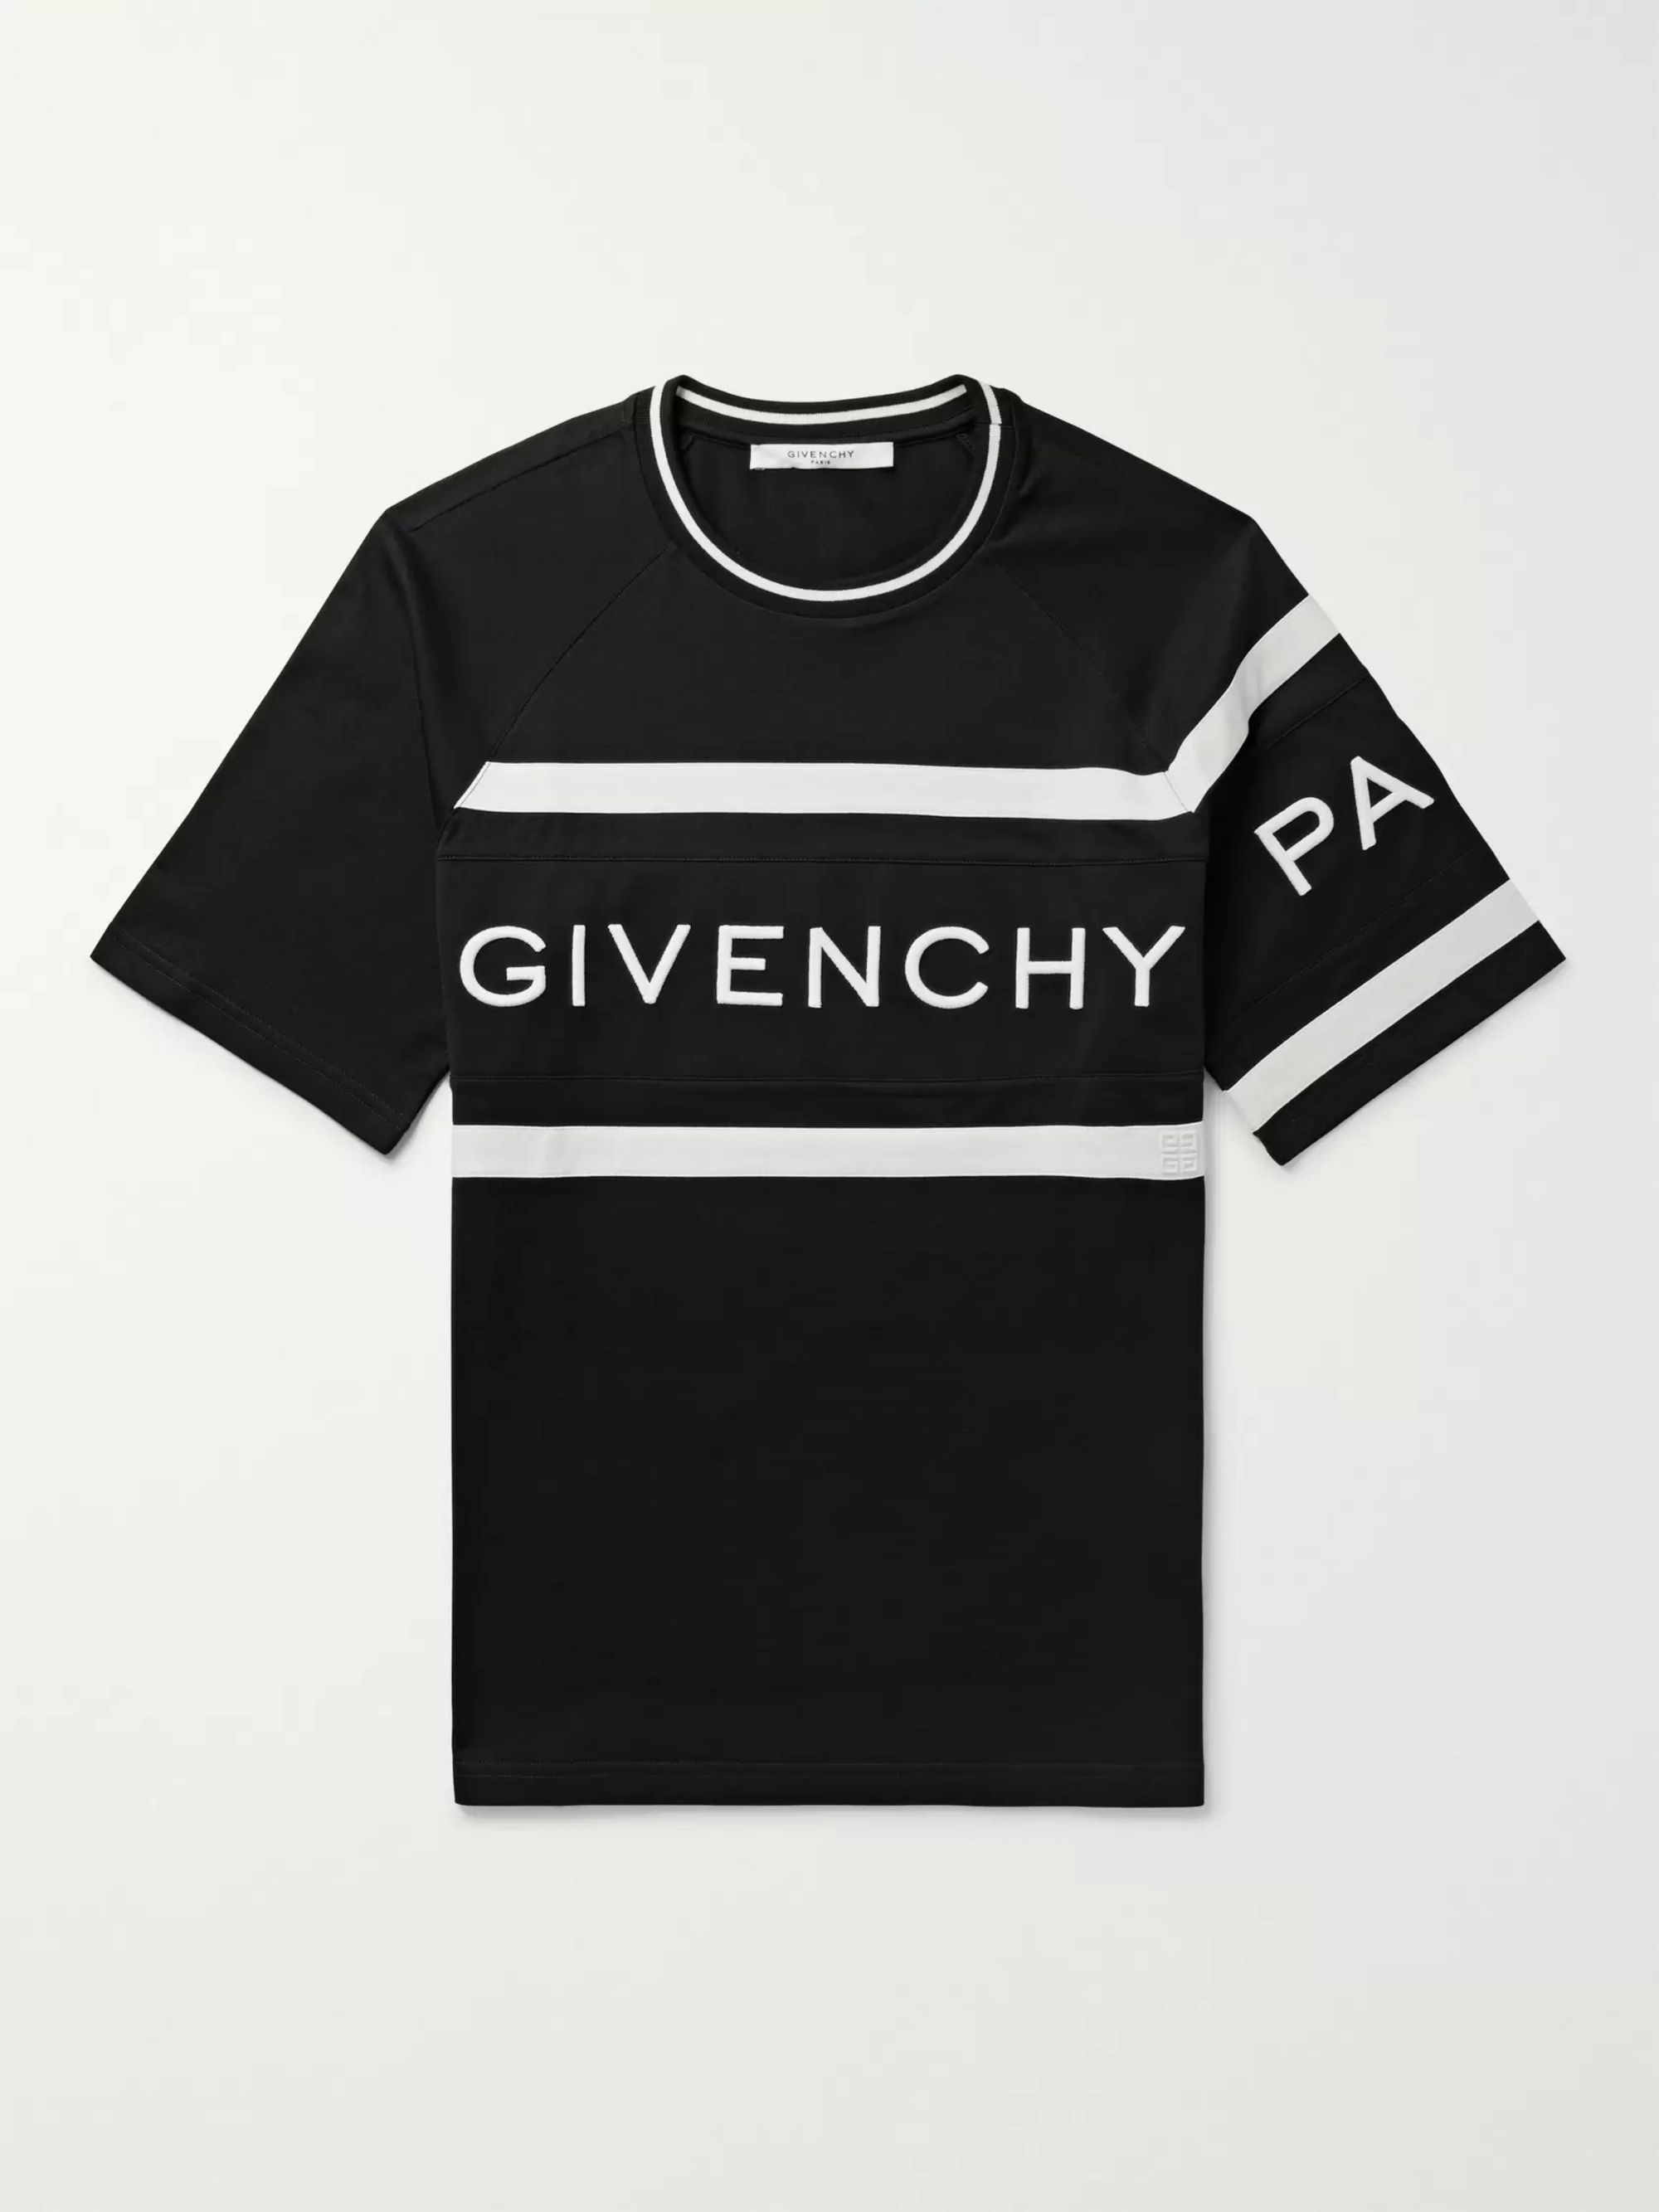 Givenchy | MR PORTER